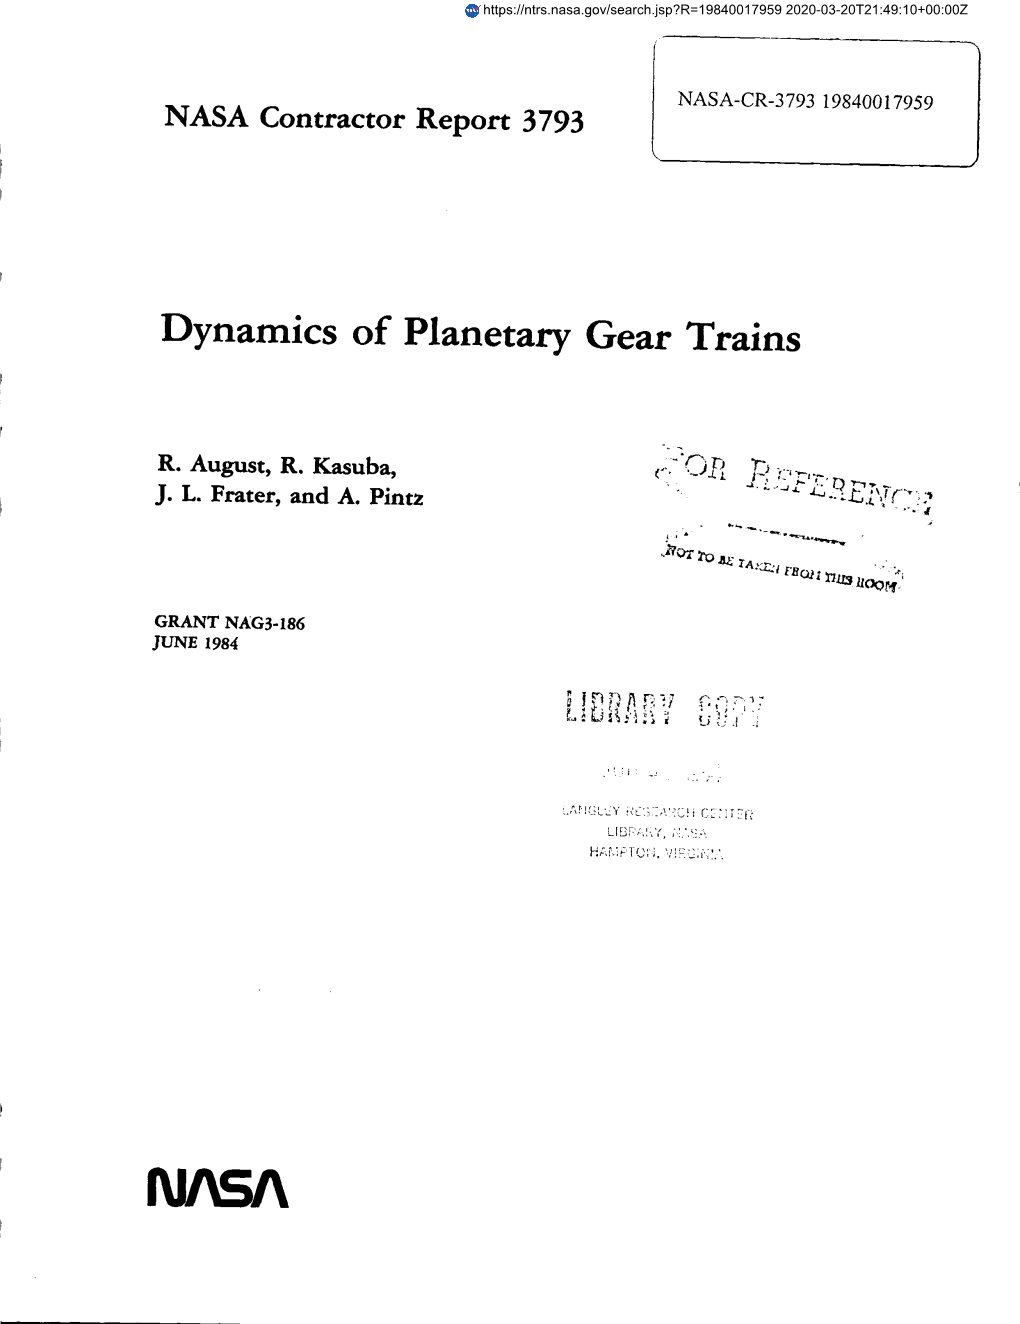 Dynamics of Planetary Gear Trains